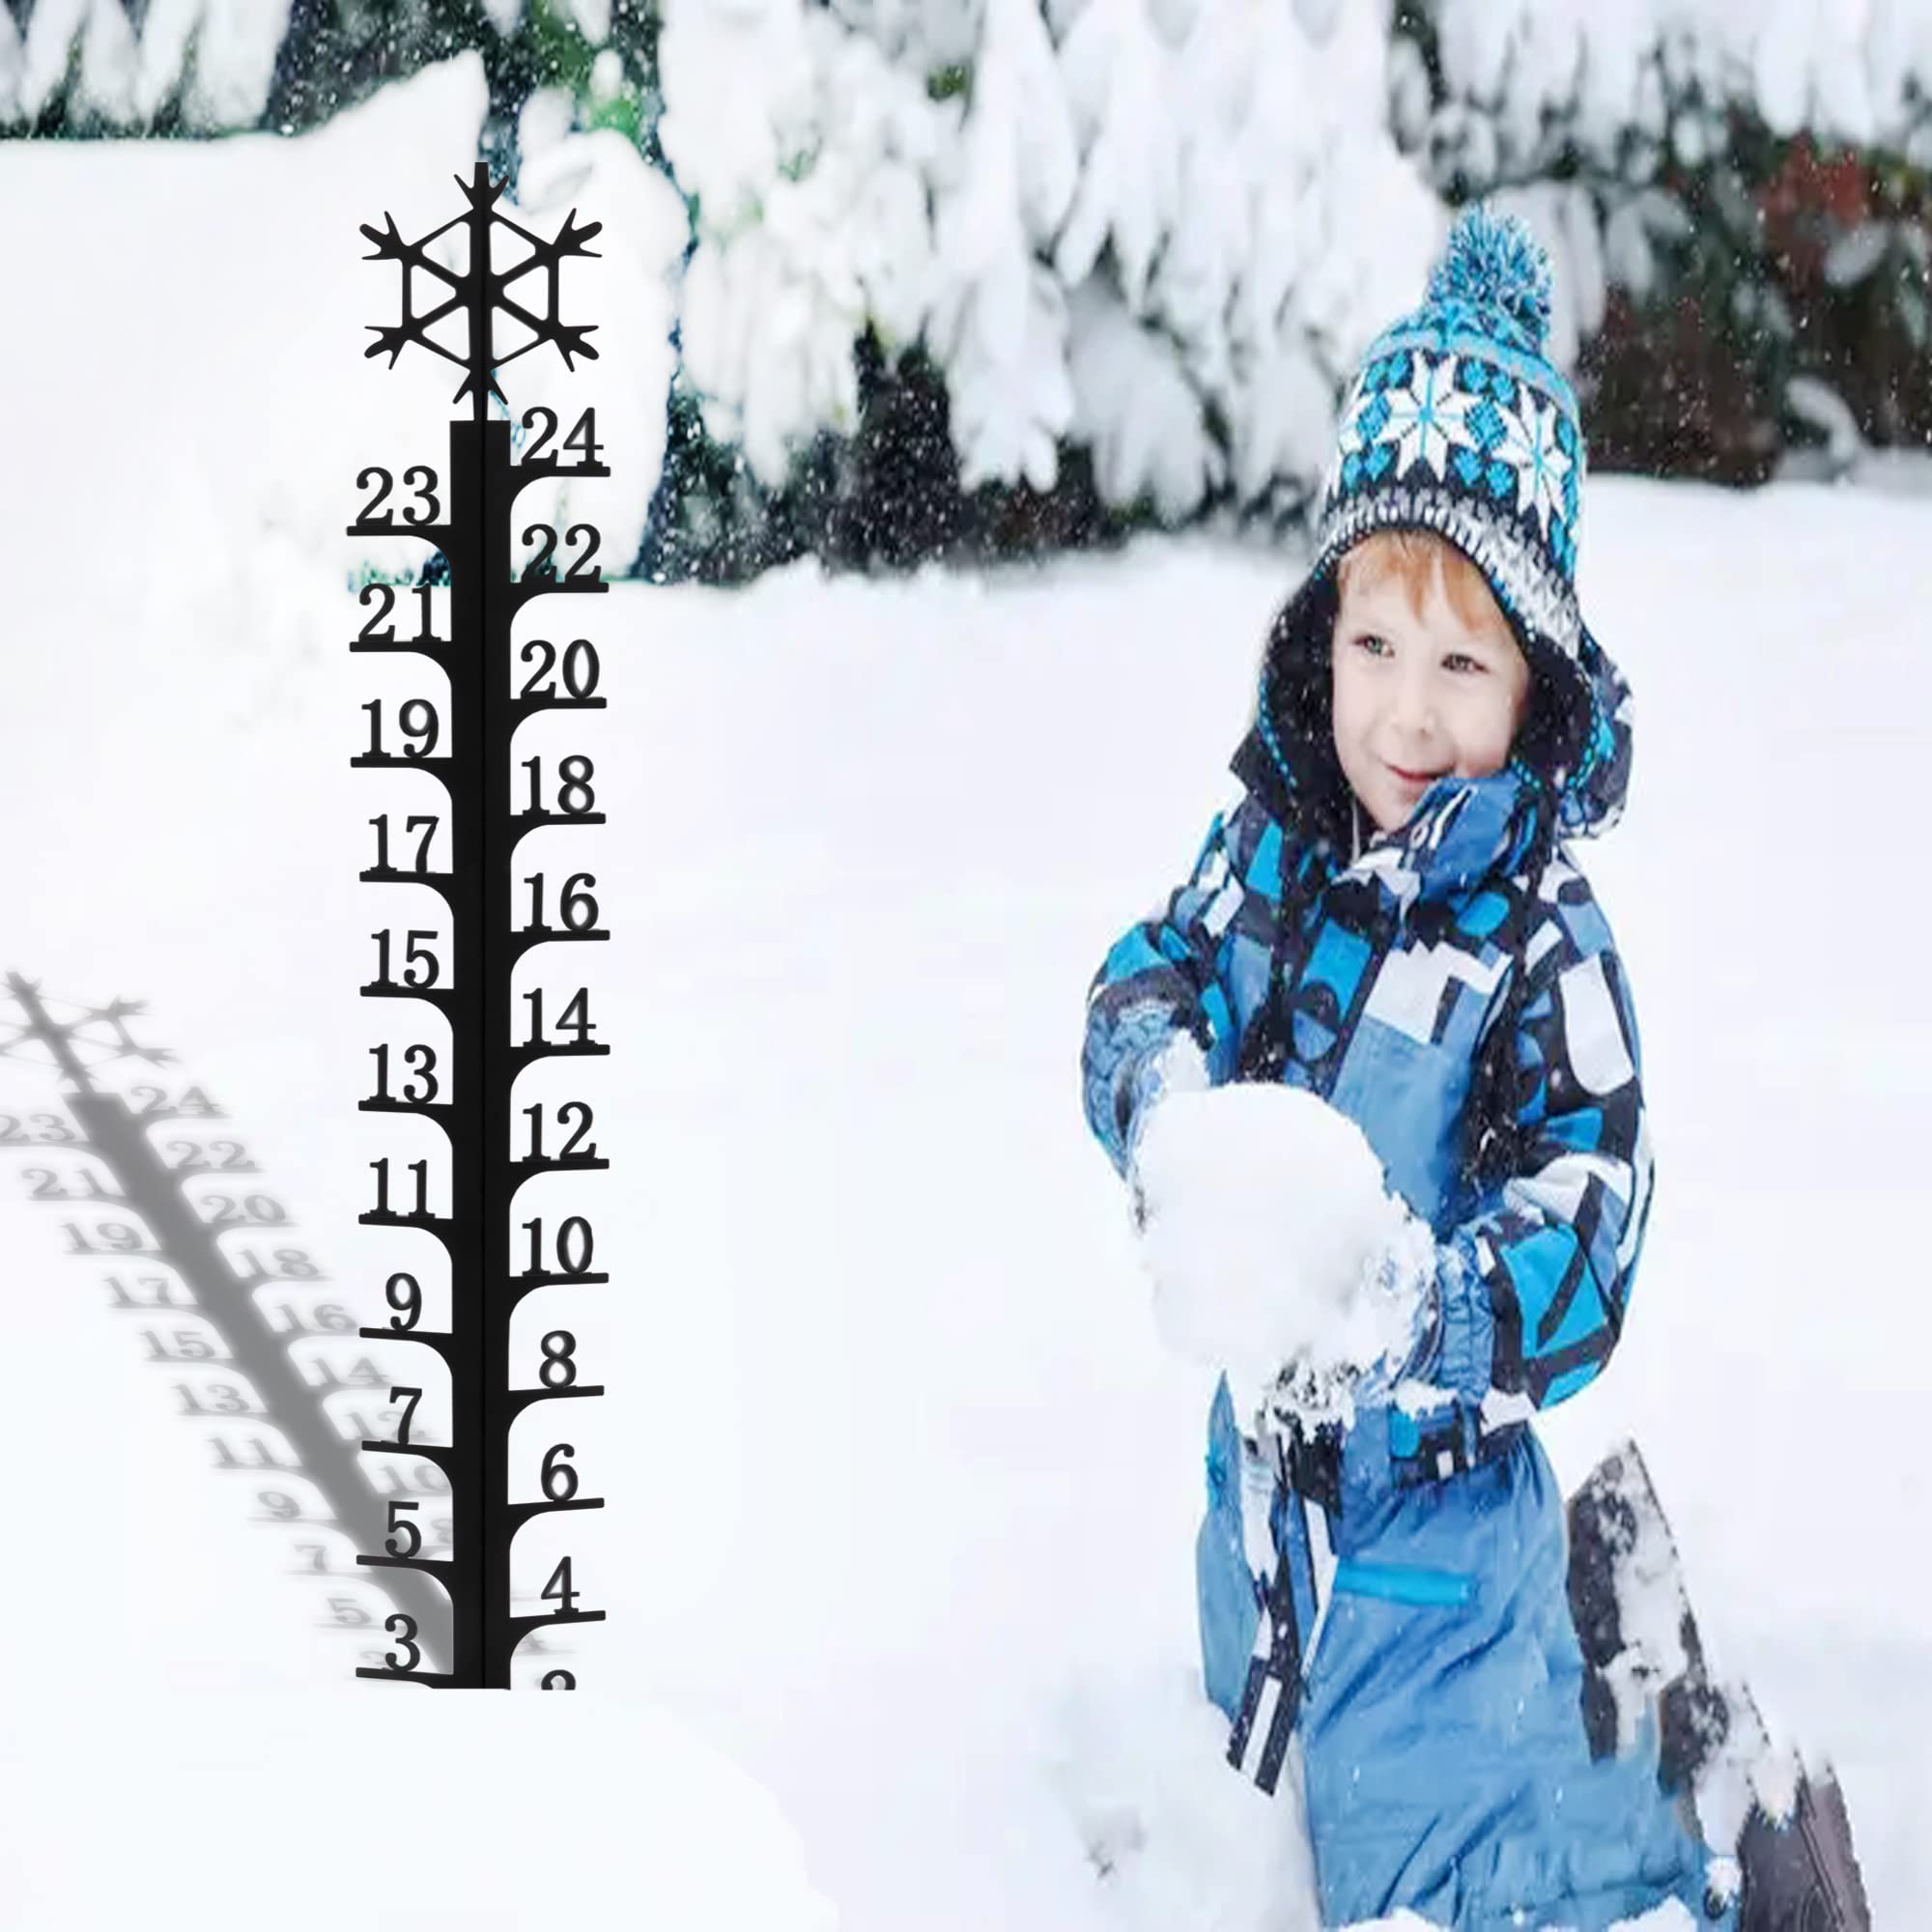 JMBay Snow Gauge Outdoor, 24 Inch Snowfall Measuring Gauge, Winter Snowflake Metal Ruler, Handmade Metal Snow Measuring Stick Snow Gauges for Yard, Christmas Rain Gauge Outdoor Decoration Gift